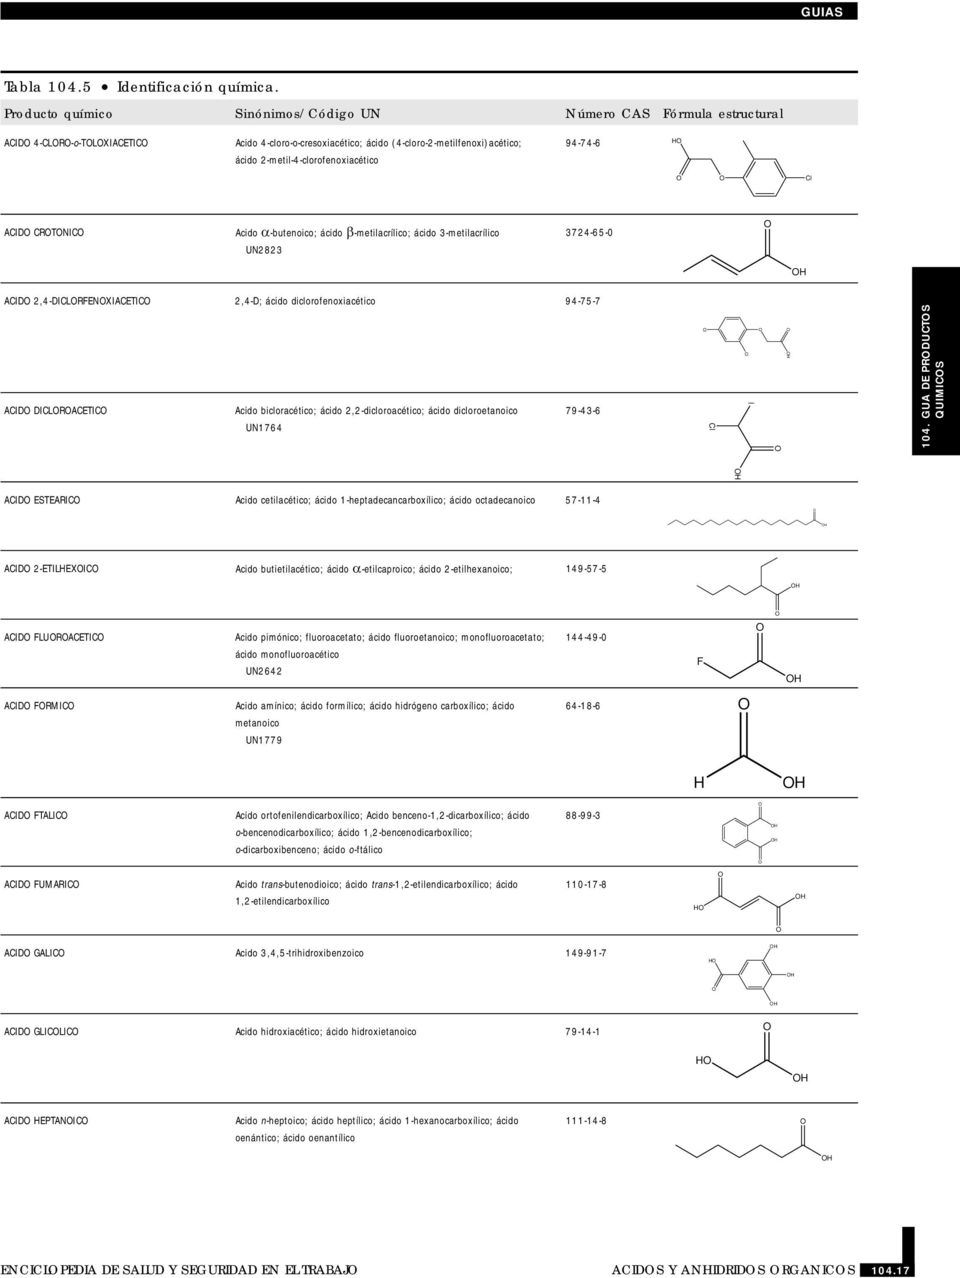 ACID CRTNIC Acido a-butenoico; ácido b-metilacrílico; ácido 3-metilacrílico UN223 3724-65-0 H ACID 2,4-DICLRFENXIACETIC 2,4-D; ácido diclorofenoxiacético 94-75-7 ACID DICLRACETIC Acido bicloracético;